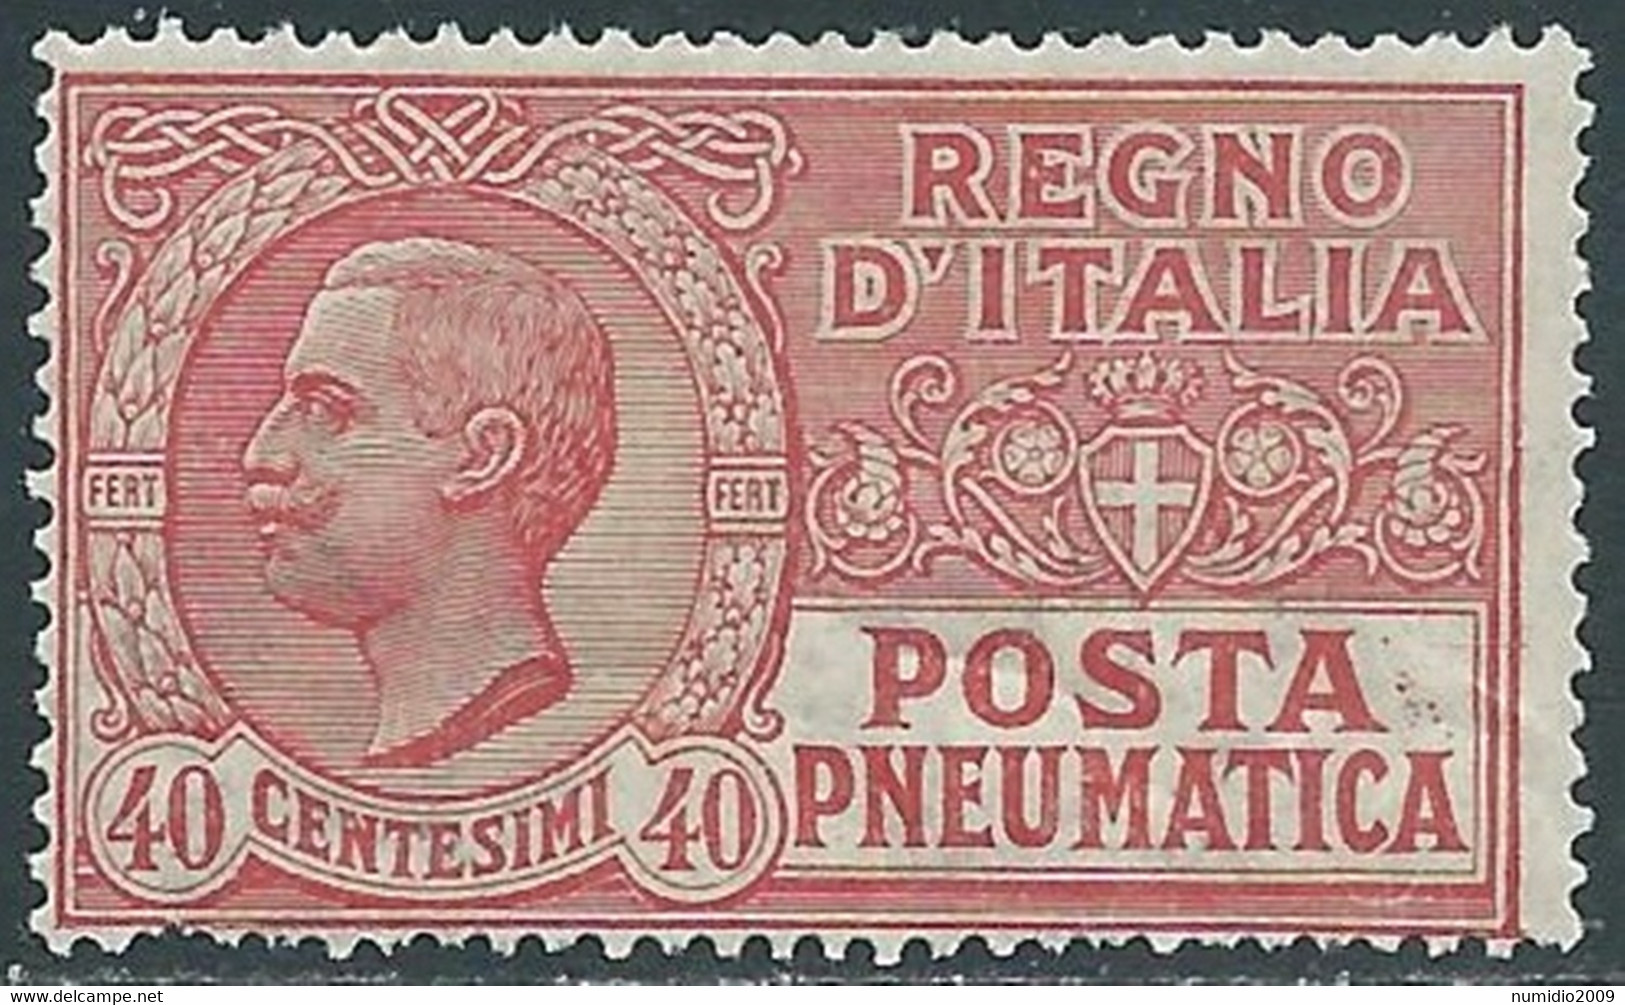 1925 REGNO POSTA PNEUMATICA 40 CENT MNH ** - RE18-3 - Poste Pneumatique